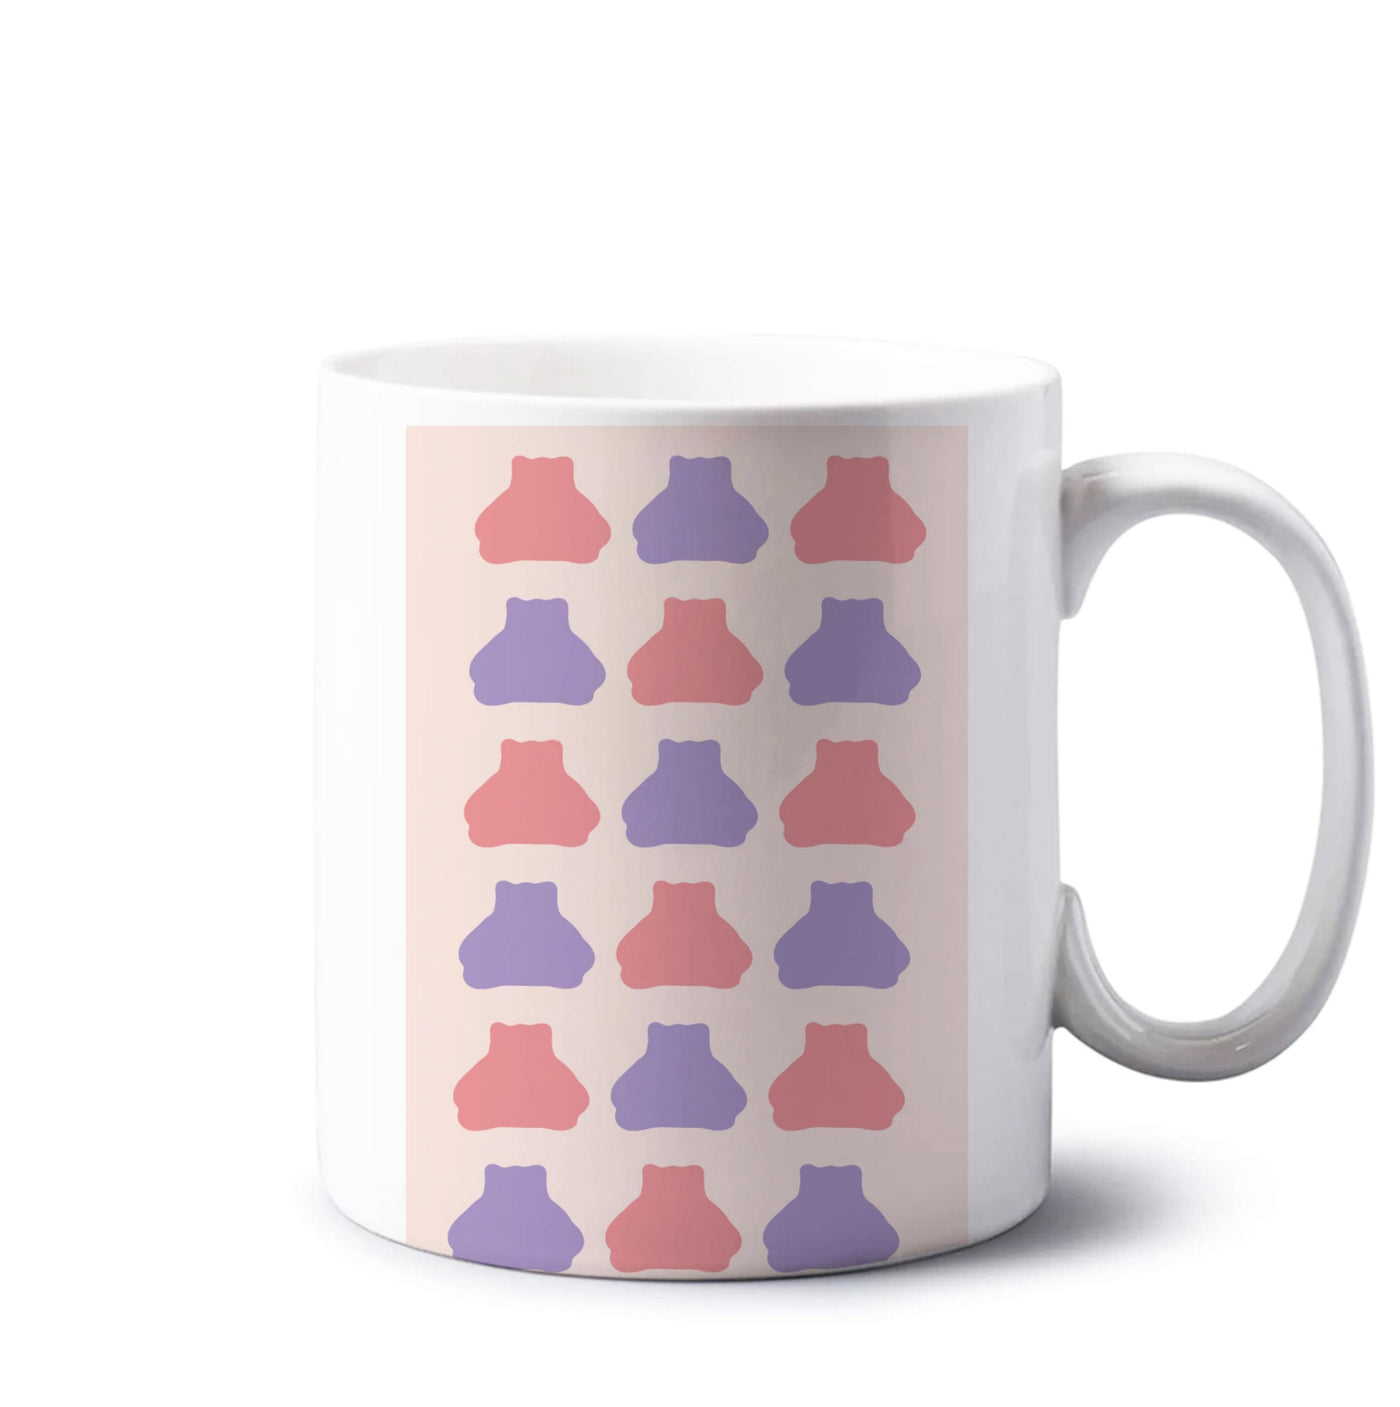 Snorlex pattern Mug